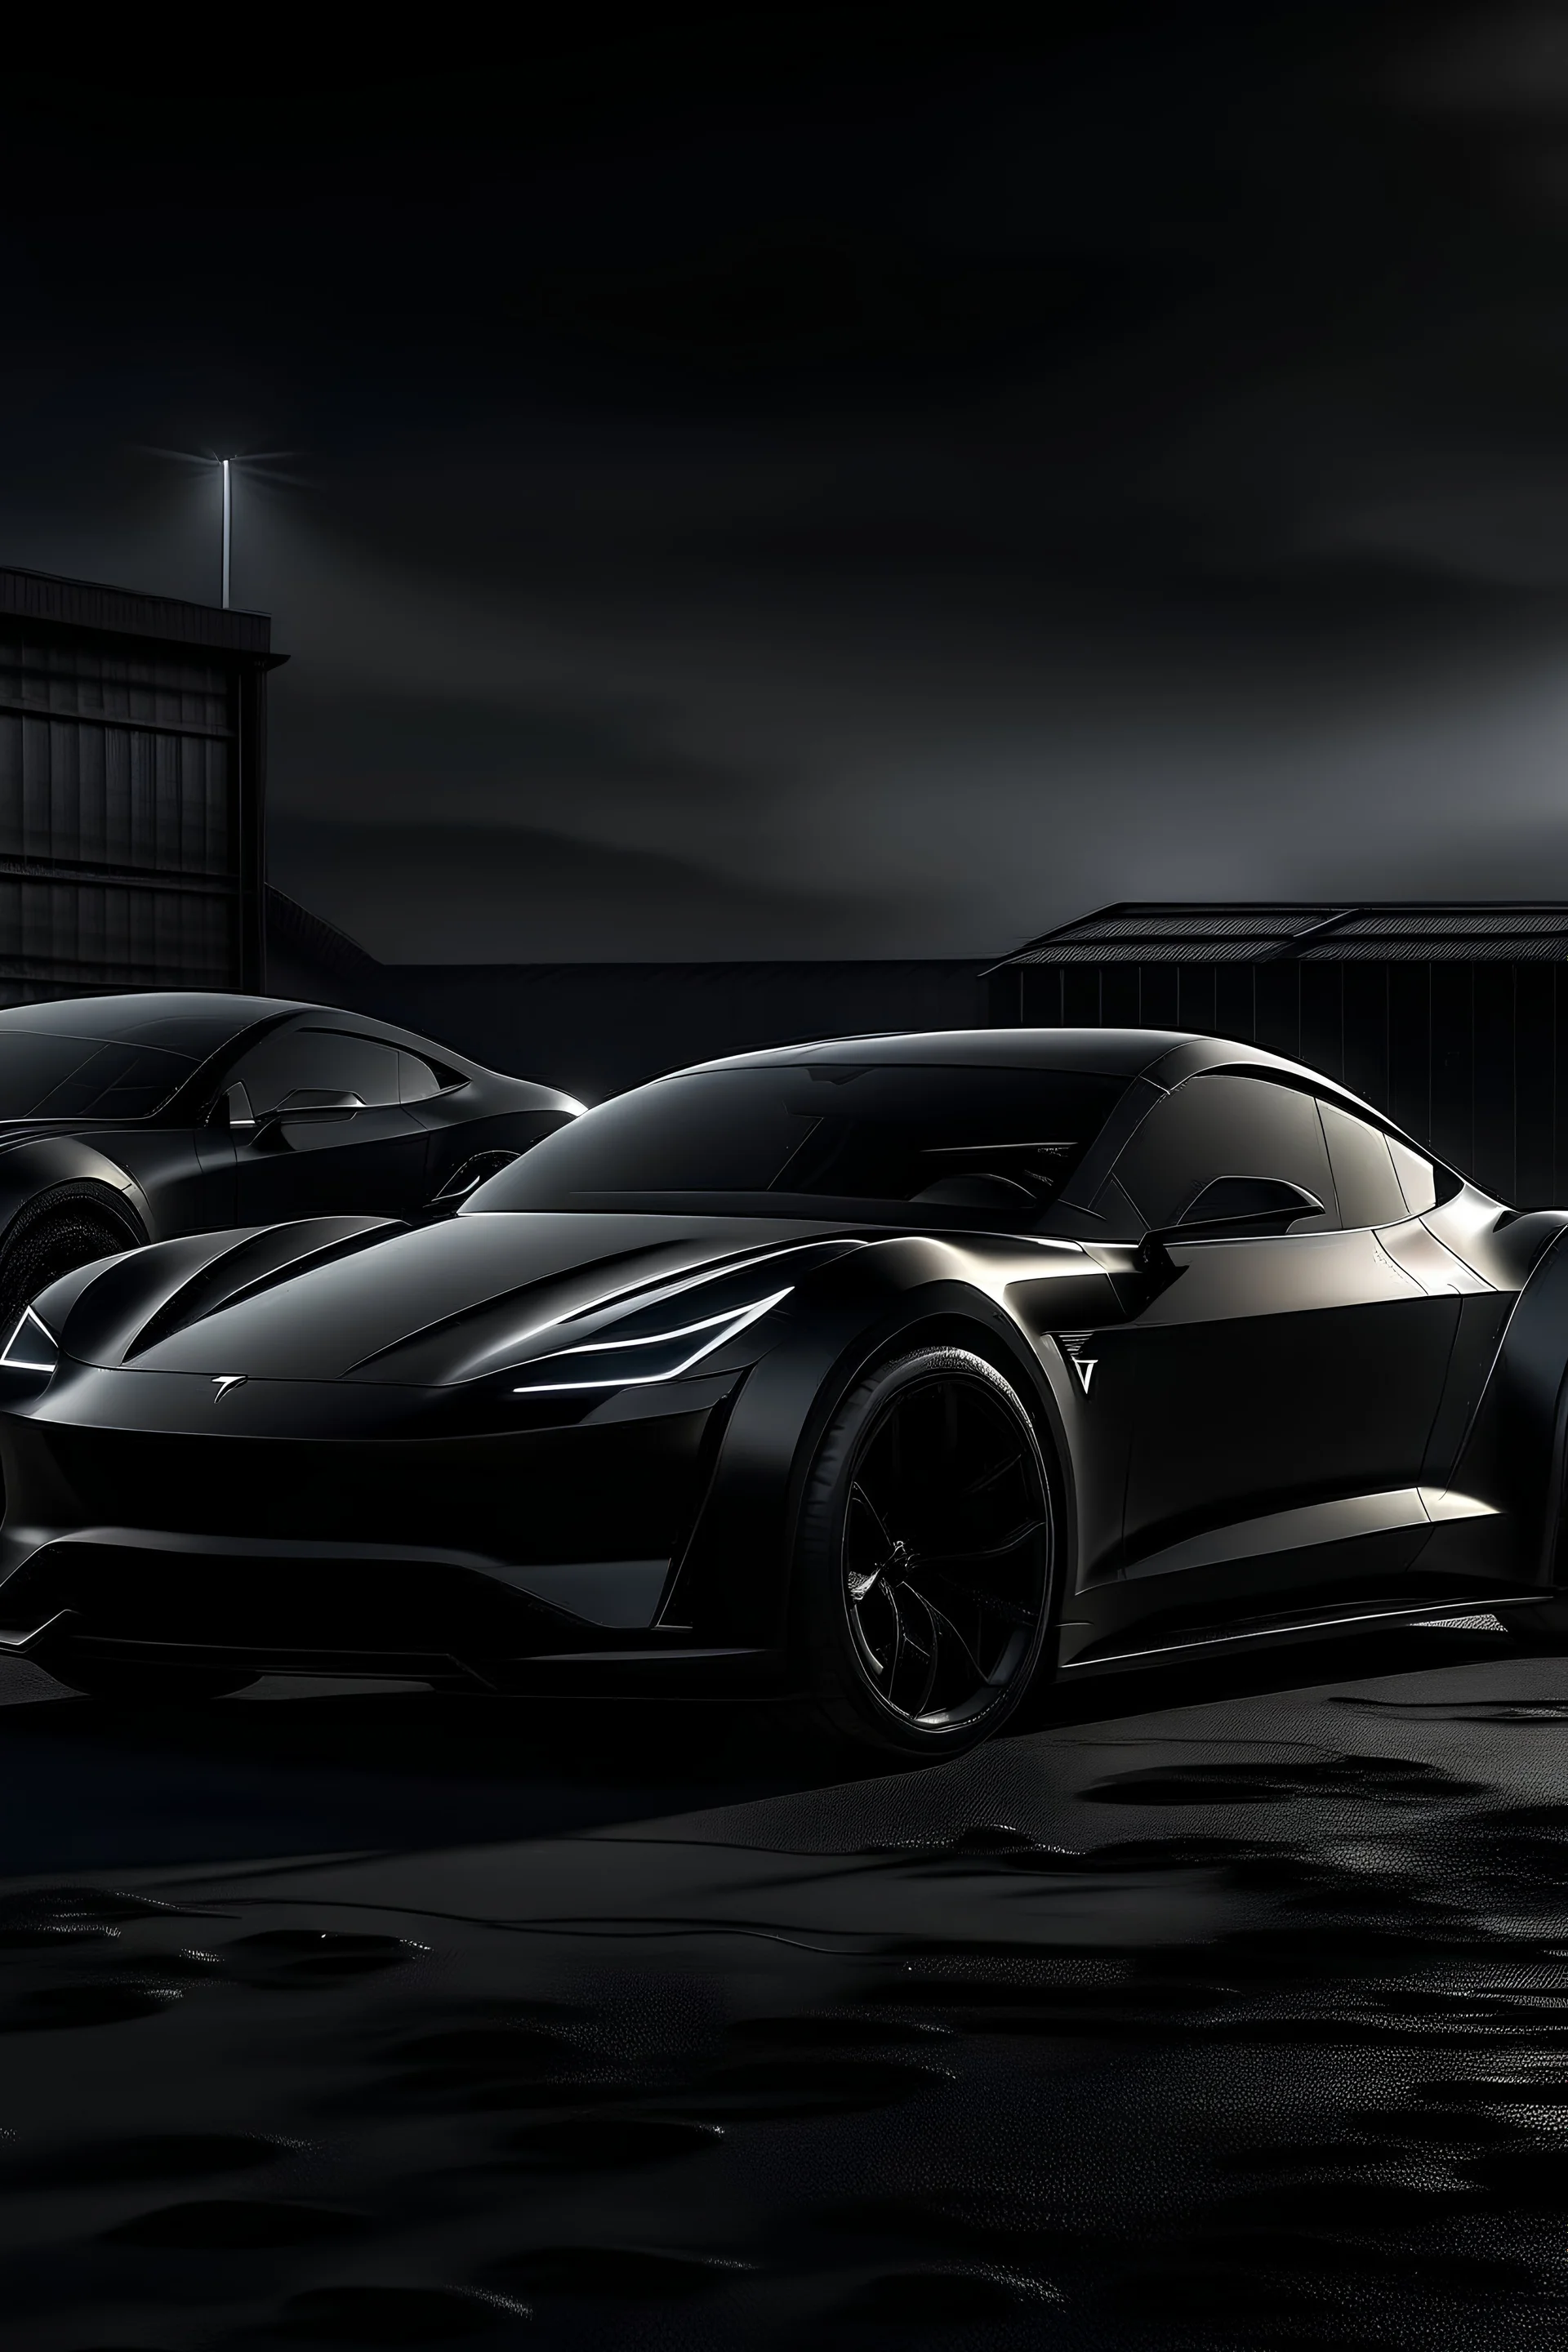 A black shiny Tesla Roadster next to a black shiny Tesla Cybertruck in a dark theme pose with an epic background